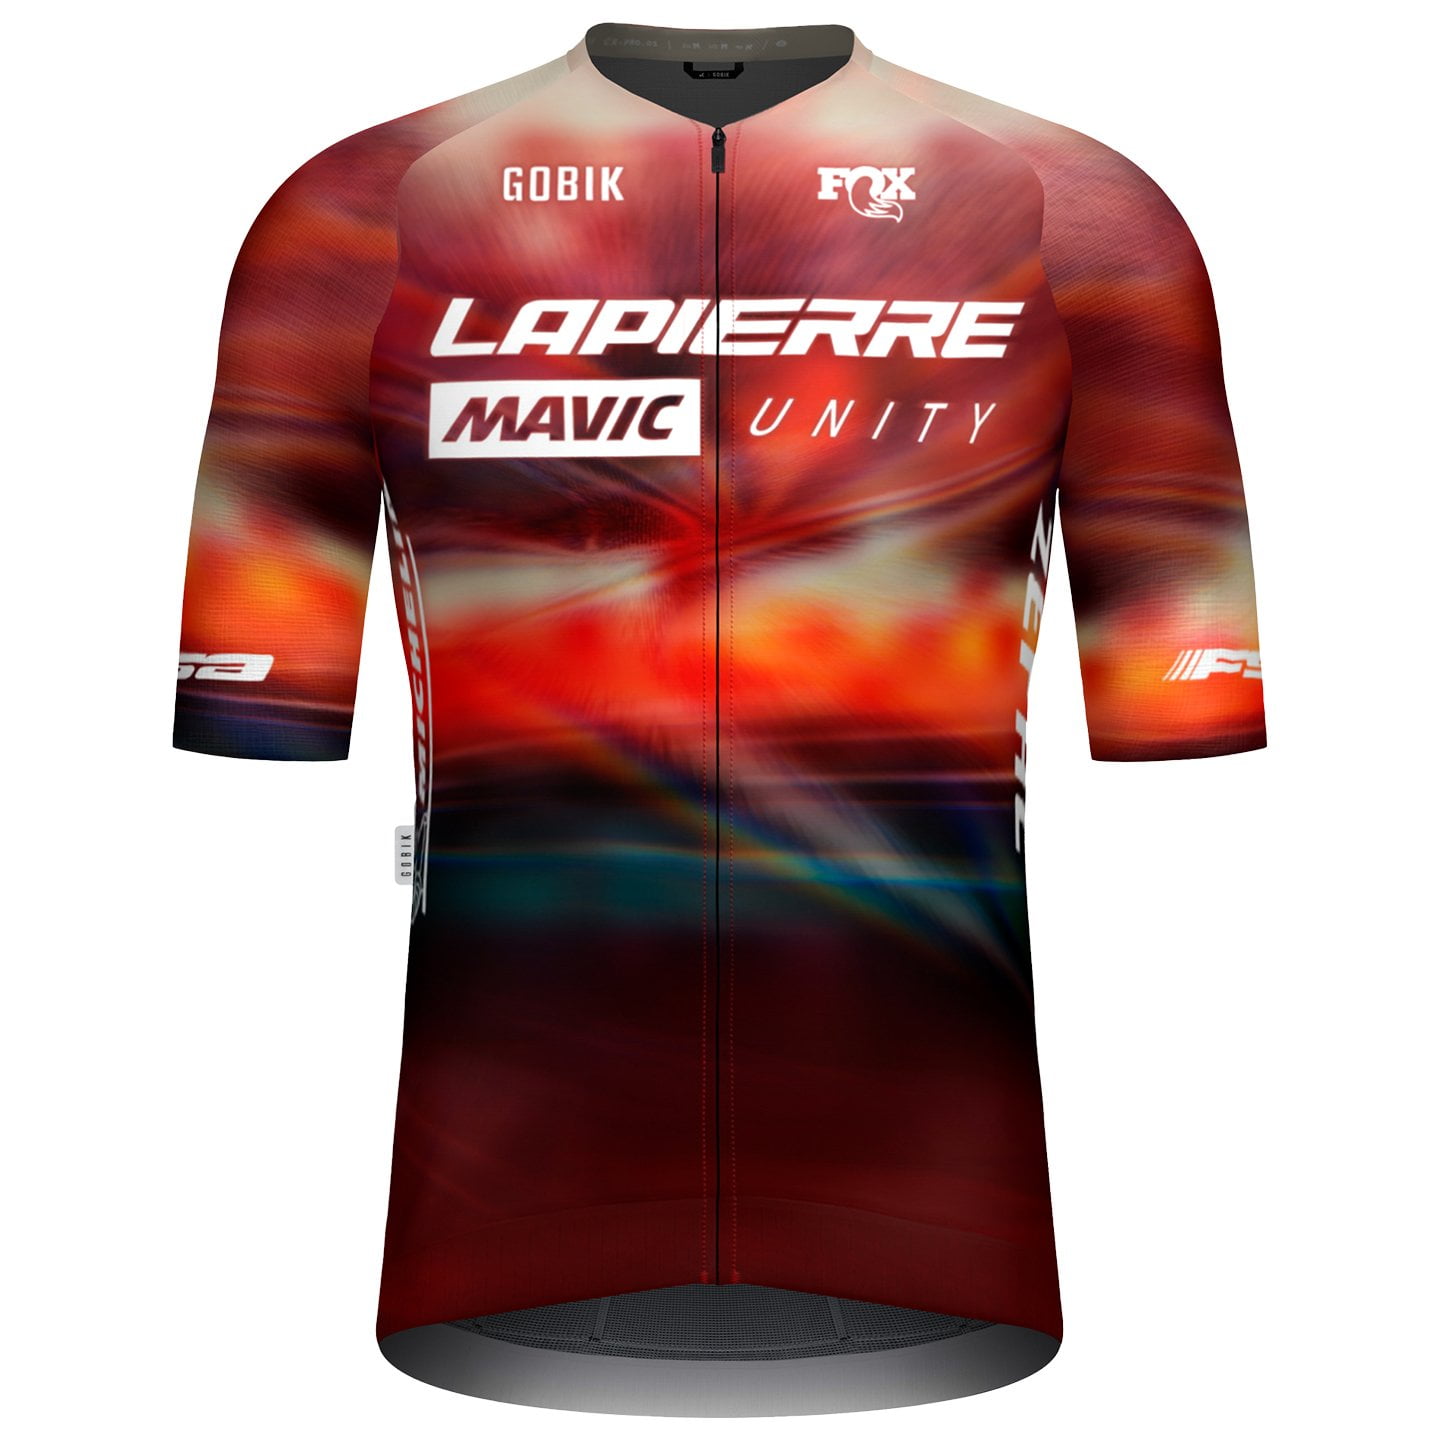 LAPIERRE-MAVIC UNITY 2024 Short Sleeve Jersey, for men, size 2XL, Cycle shirt, Bike gear